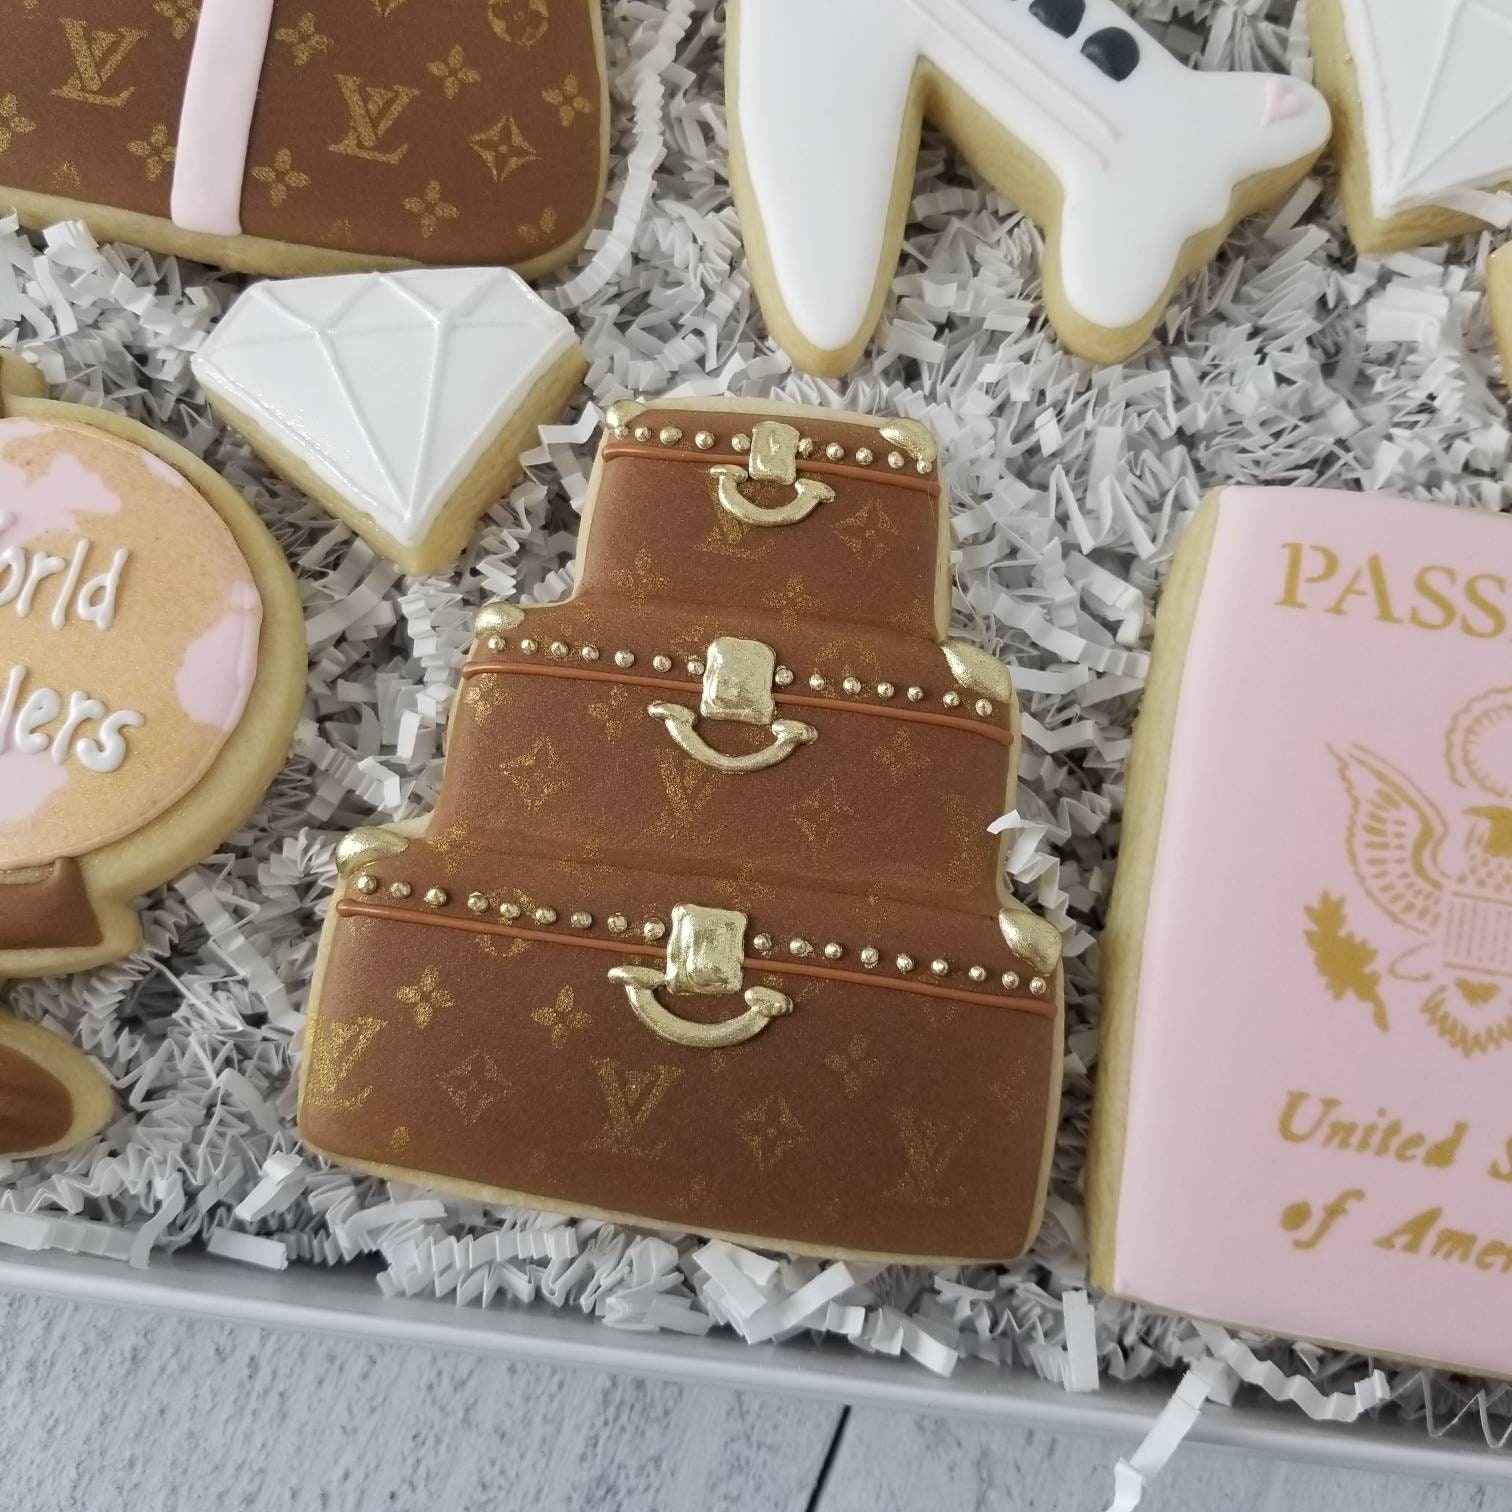 Designer Luggage Cookies Suitcase Cookies Travel Theme -  Sweden